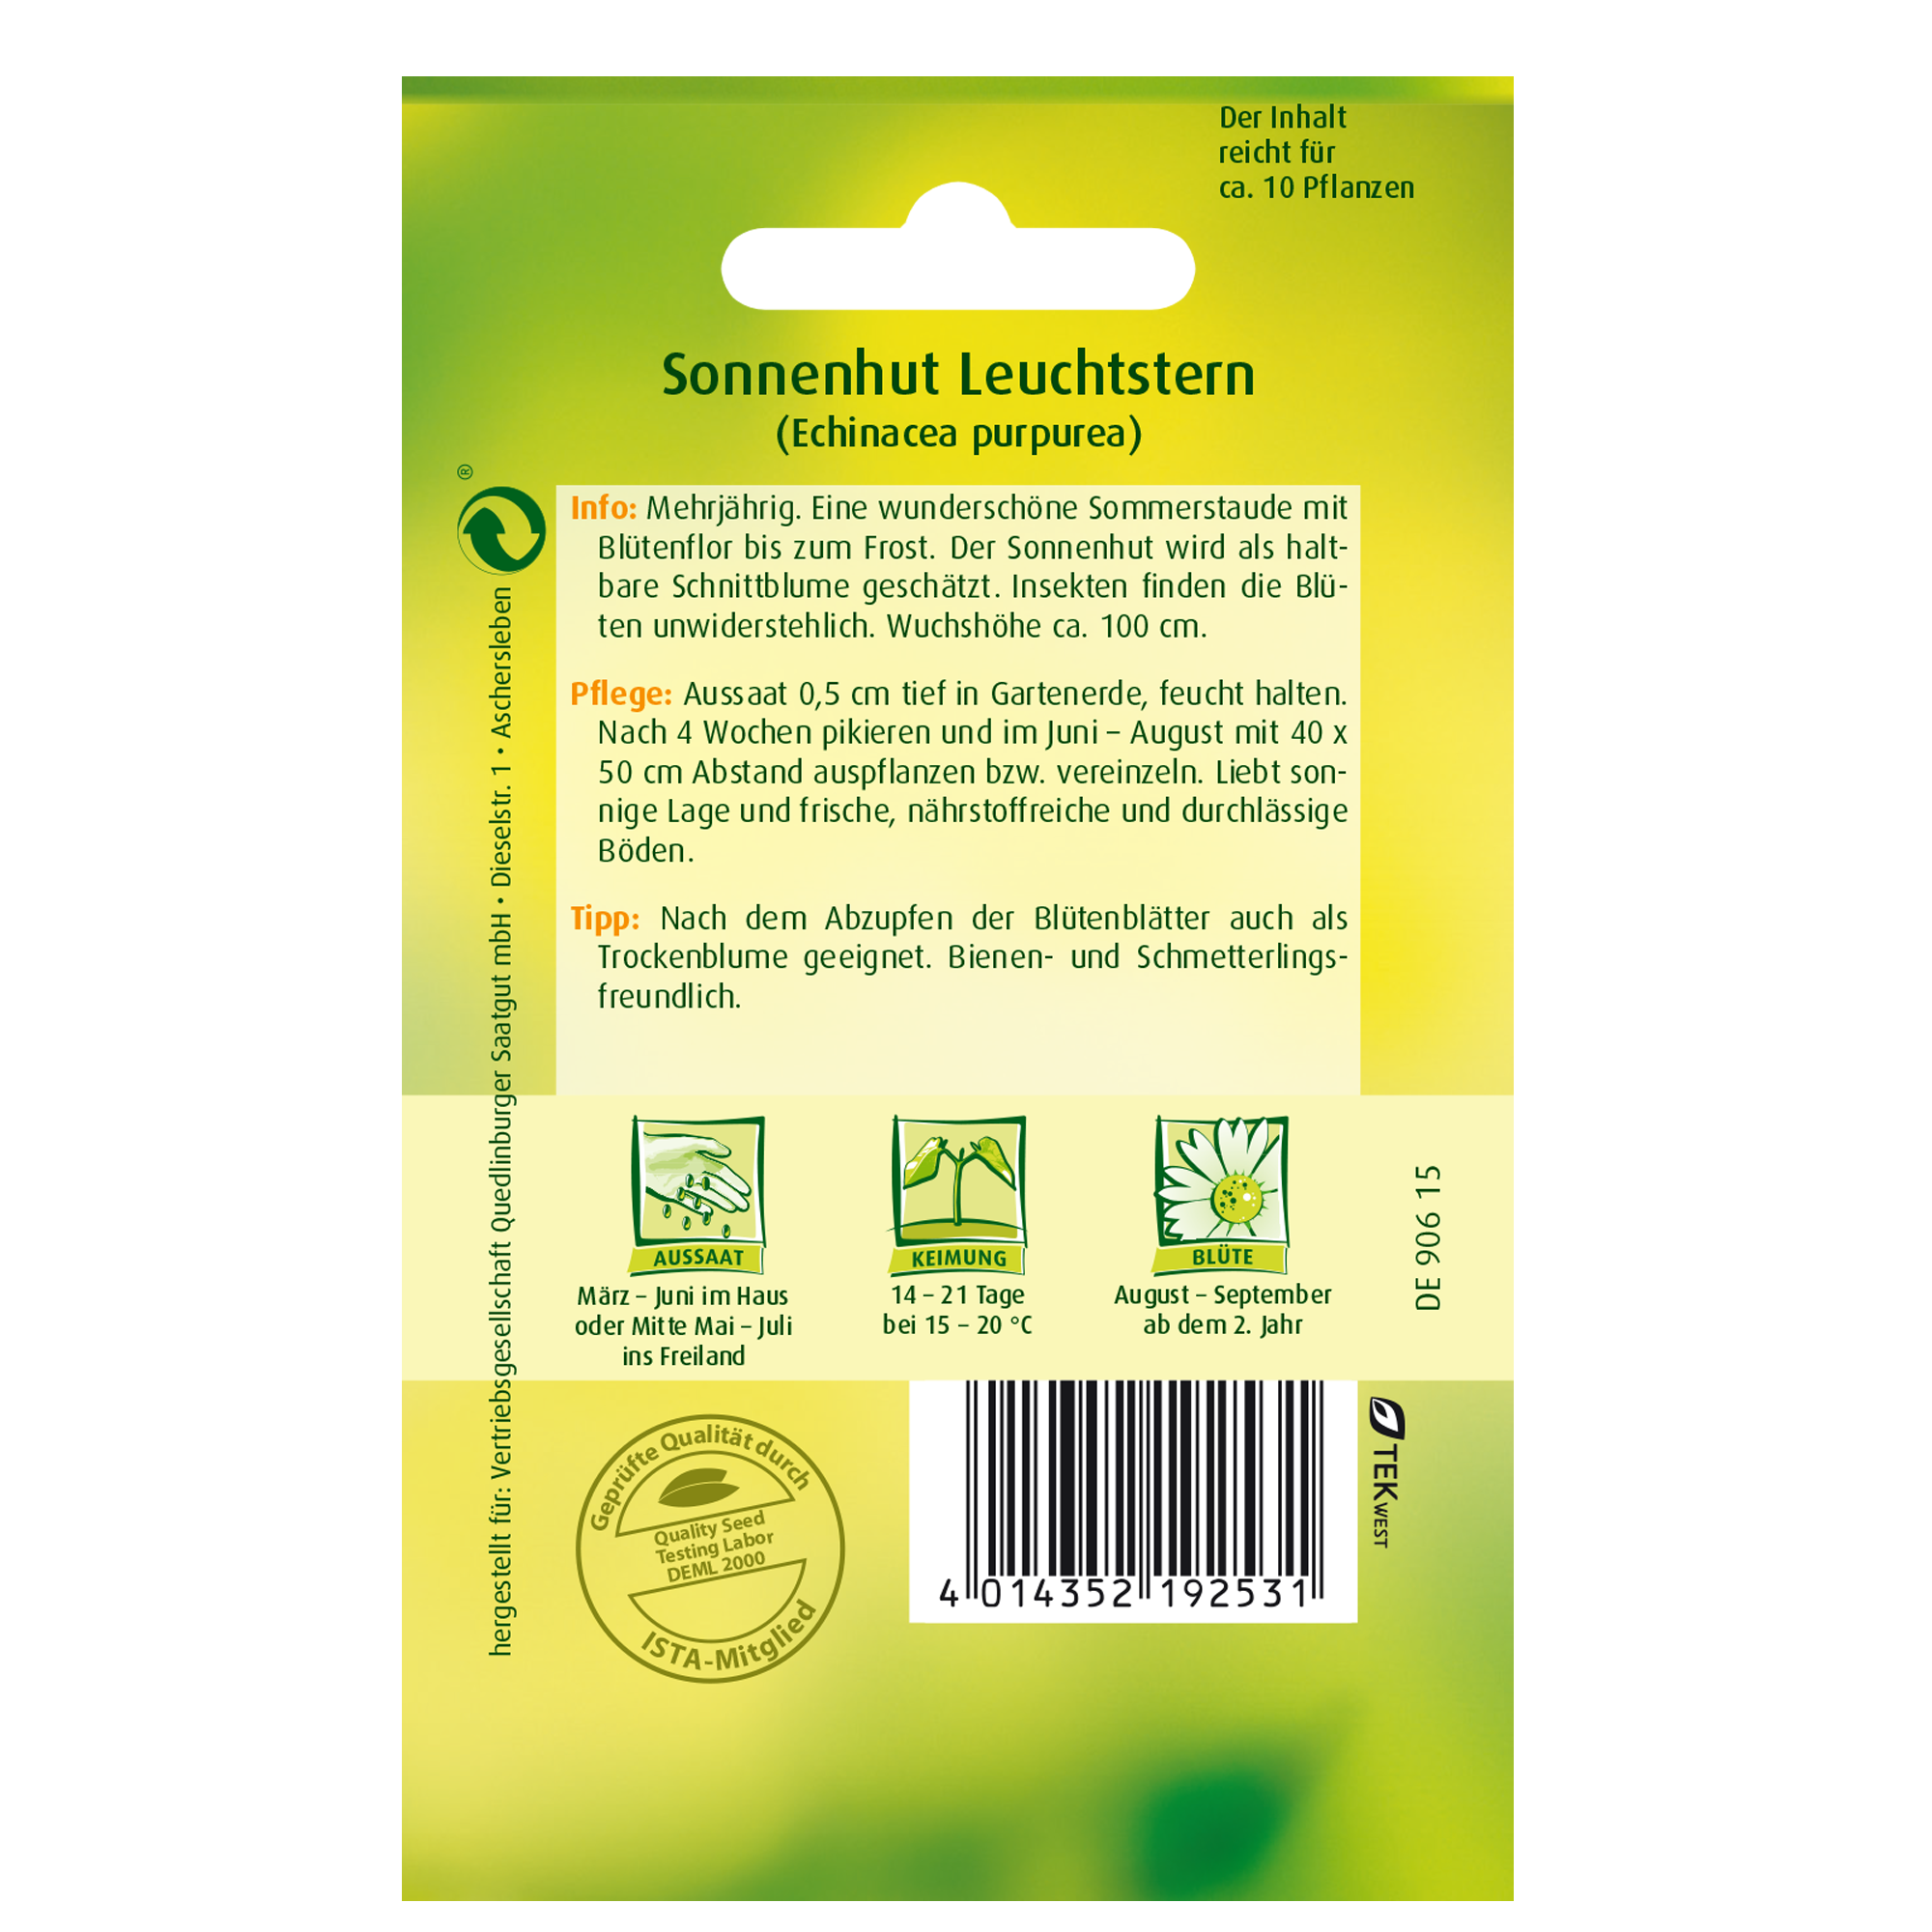 Sonnenhut 'Leuchtstern' + product picture